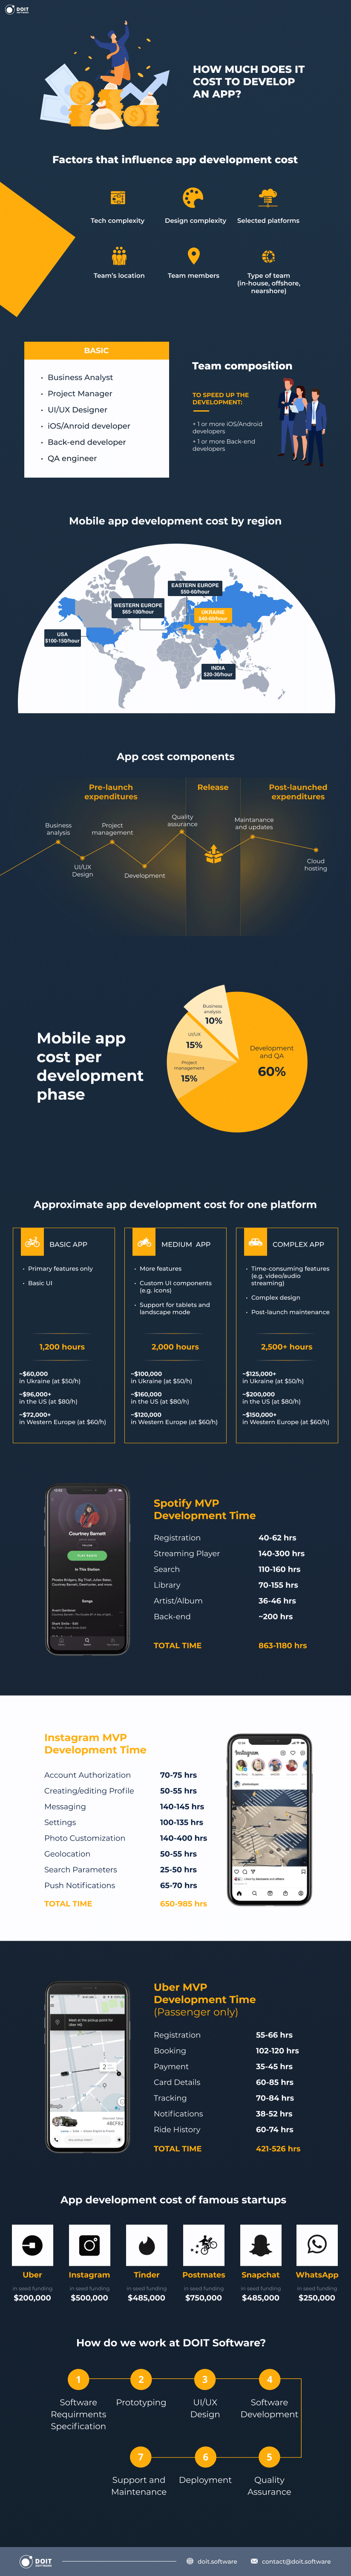 App Development Cost Guide